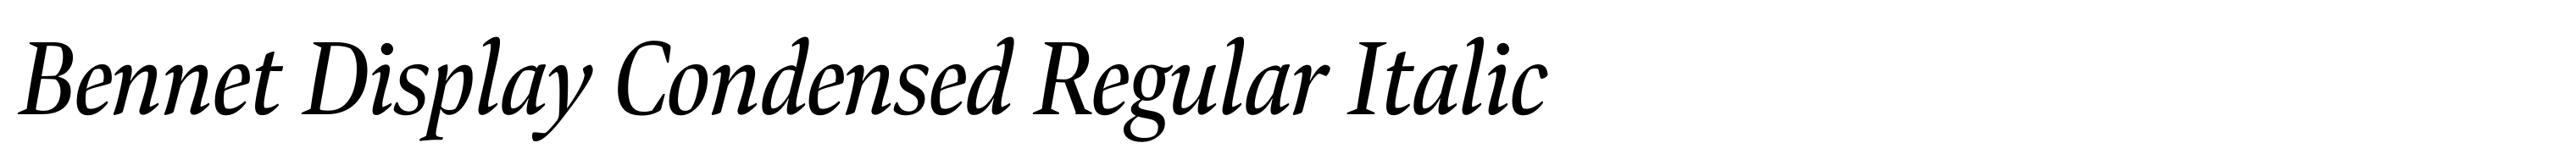 Bennet Display Condensed Regular Italic